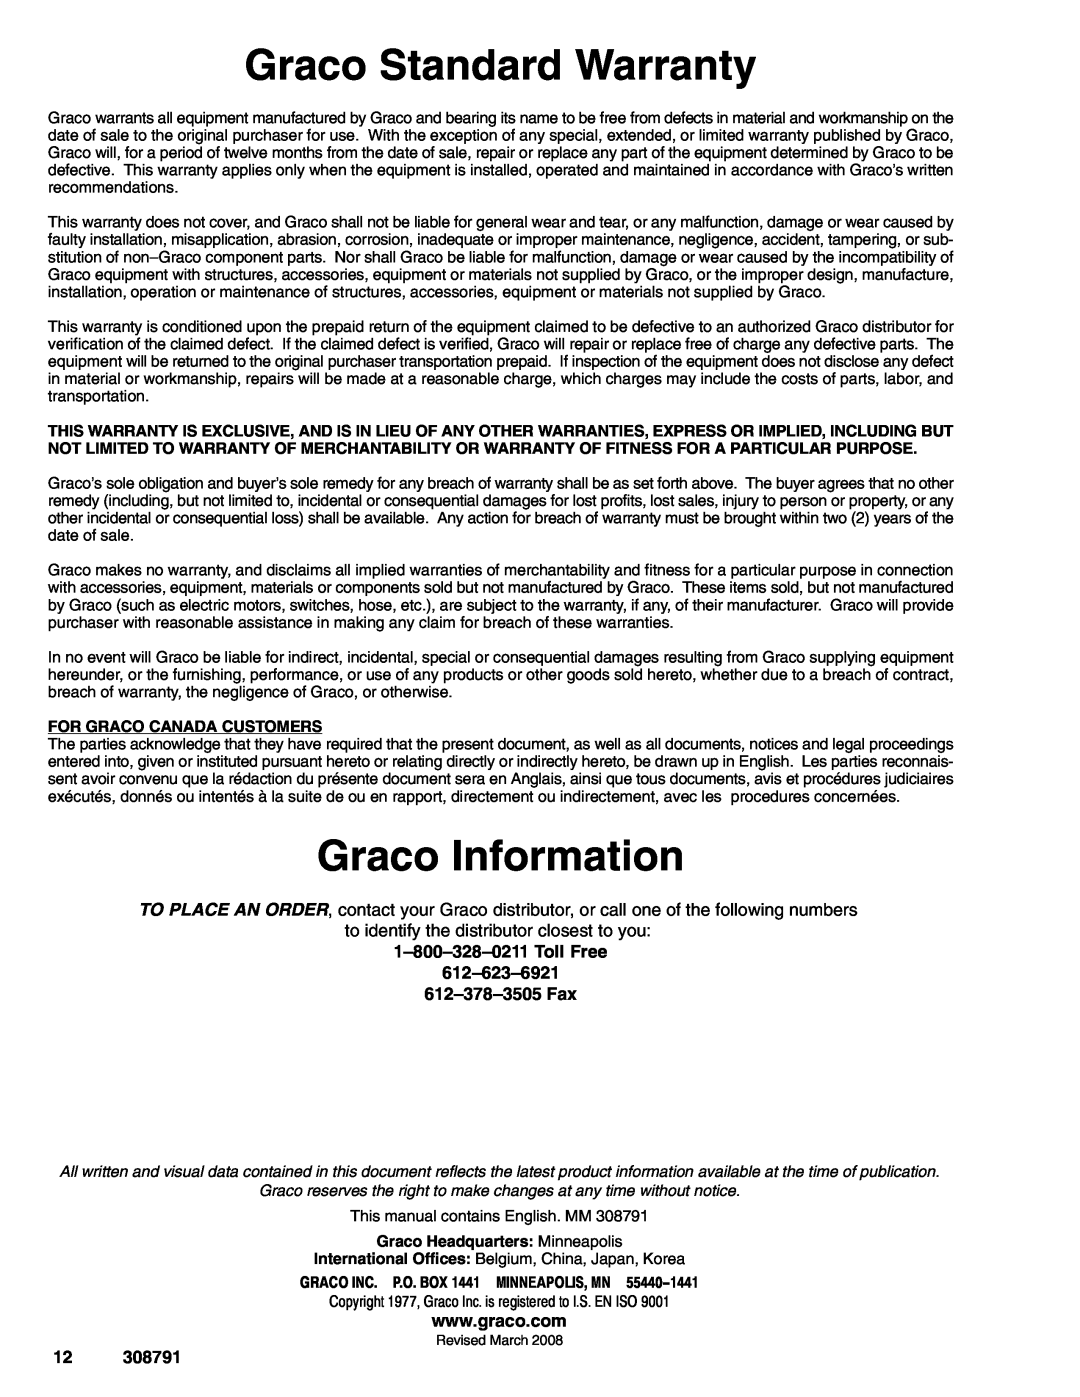 Graco 308791E Graco Standard Warranty, Graco Information, For Graco Canada Customers, Graco Headquarters Minneapolis 